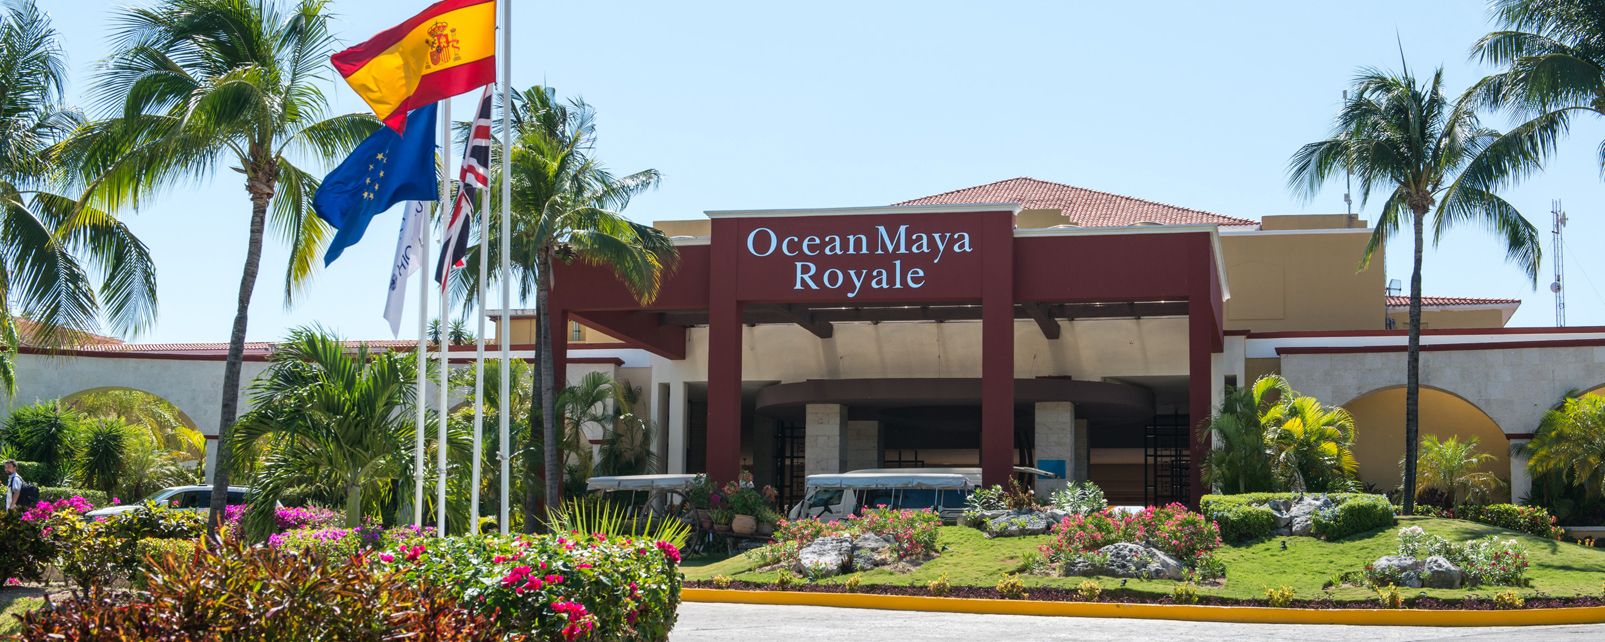 Hotel Ocean Maya - All Inclusive